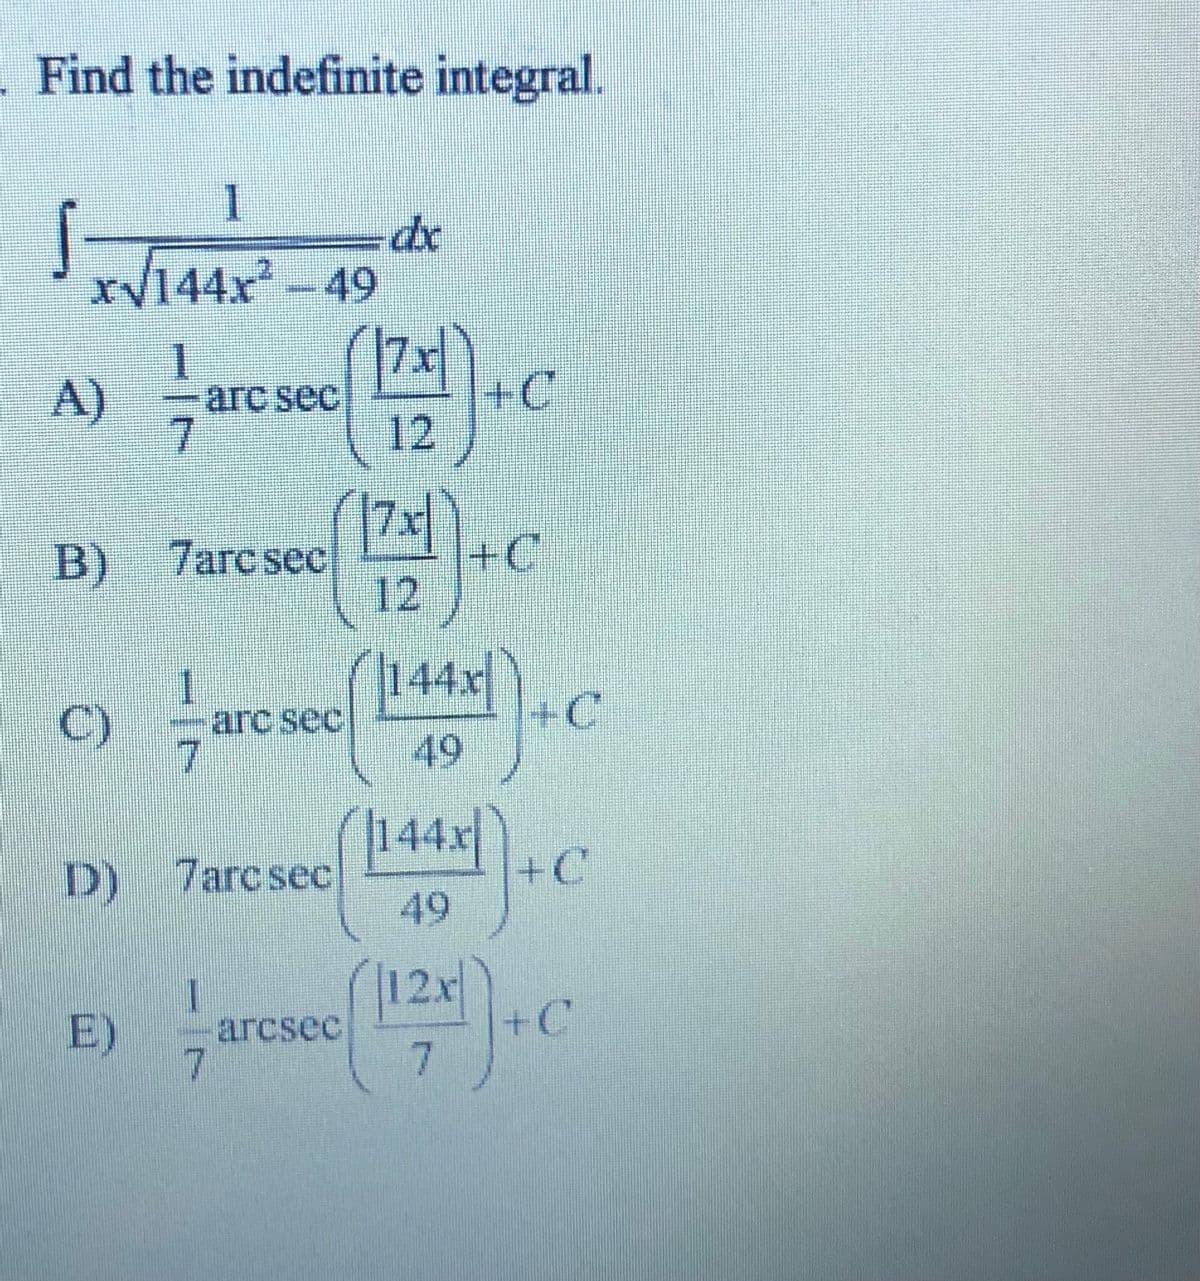 . Find the indefinite integral.
1
dx
xy144x² – 49
1.
arc sec
+C
12
A)
(可C
B) 7arcsec
12
(144x+C
1
C)
-arc sec
49
|144x|
+C
D) 7arcsec
49
12x
+C
7
1
E)
arcsec
7.
